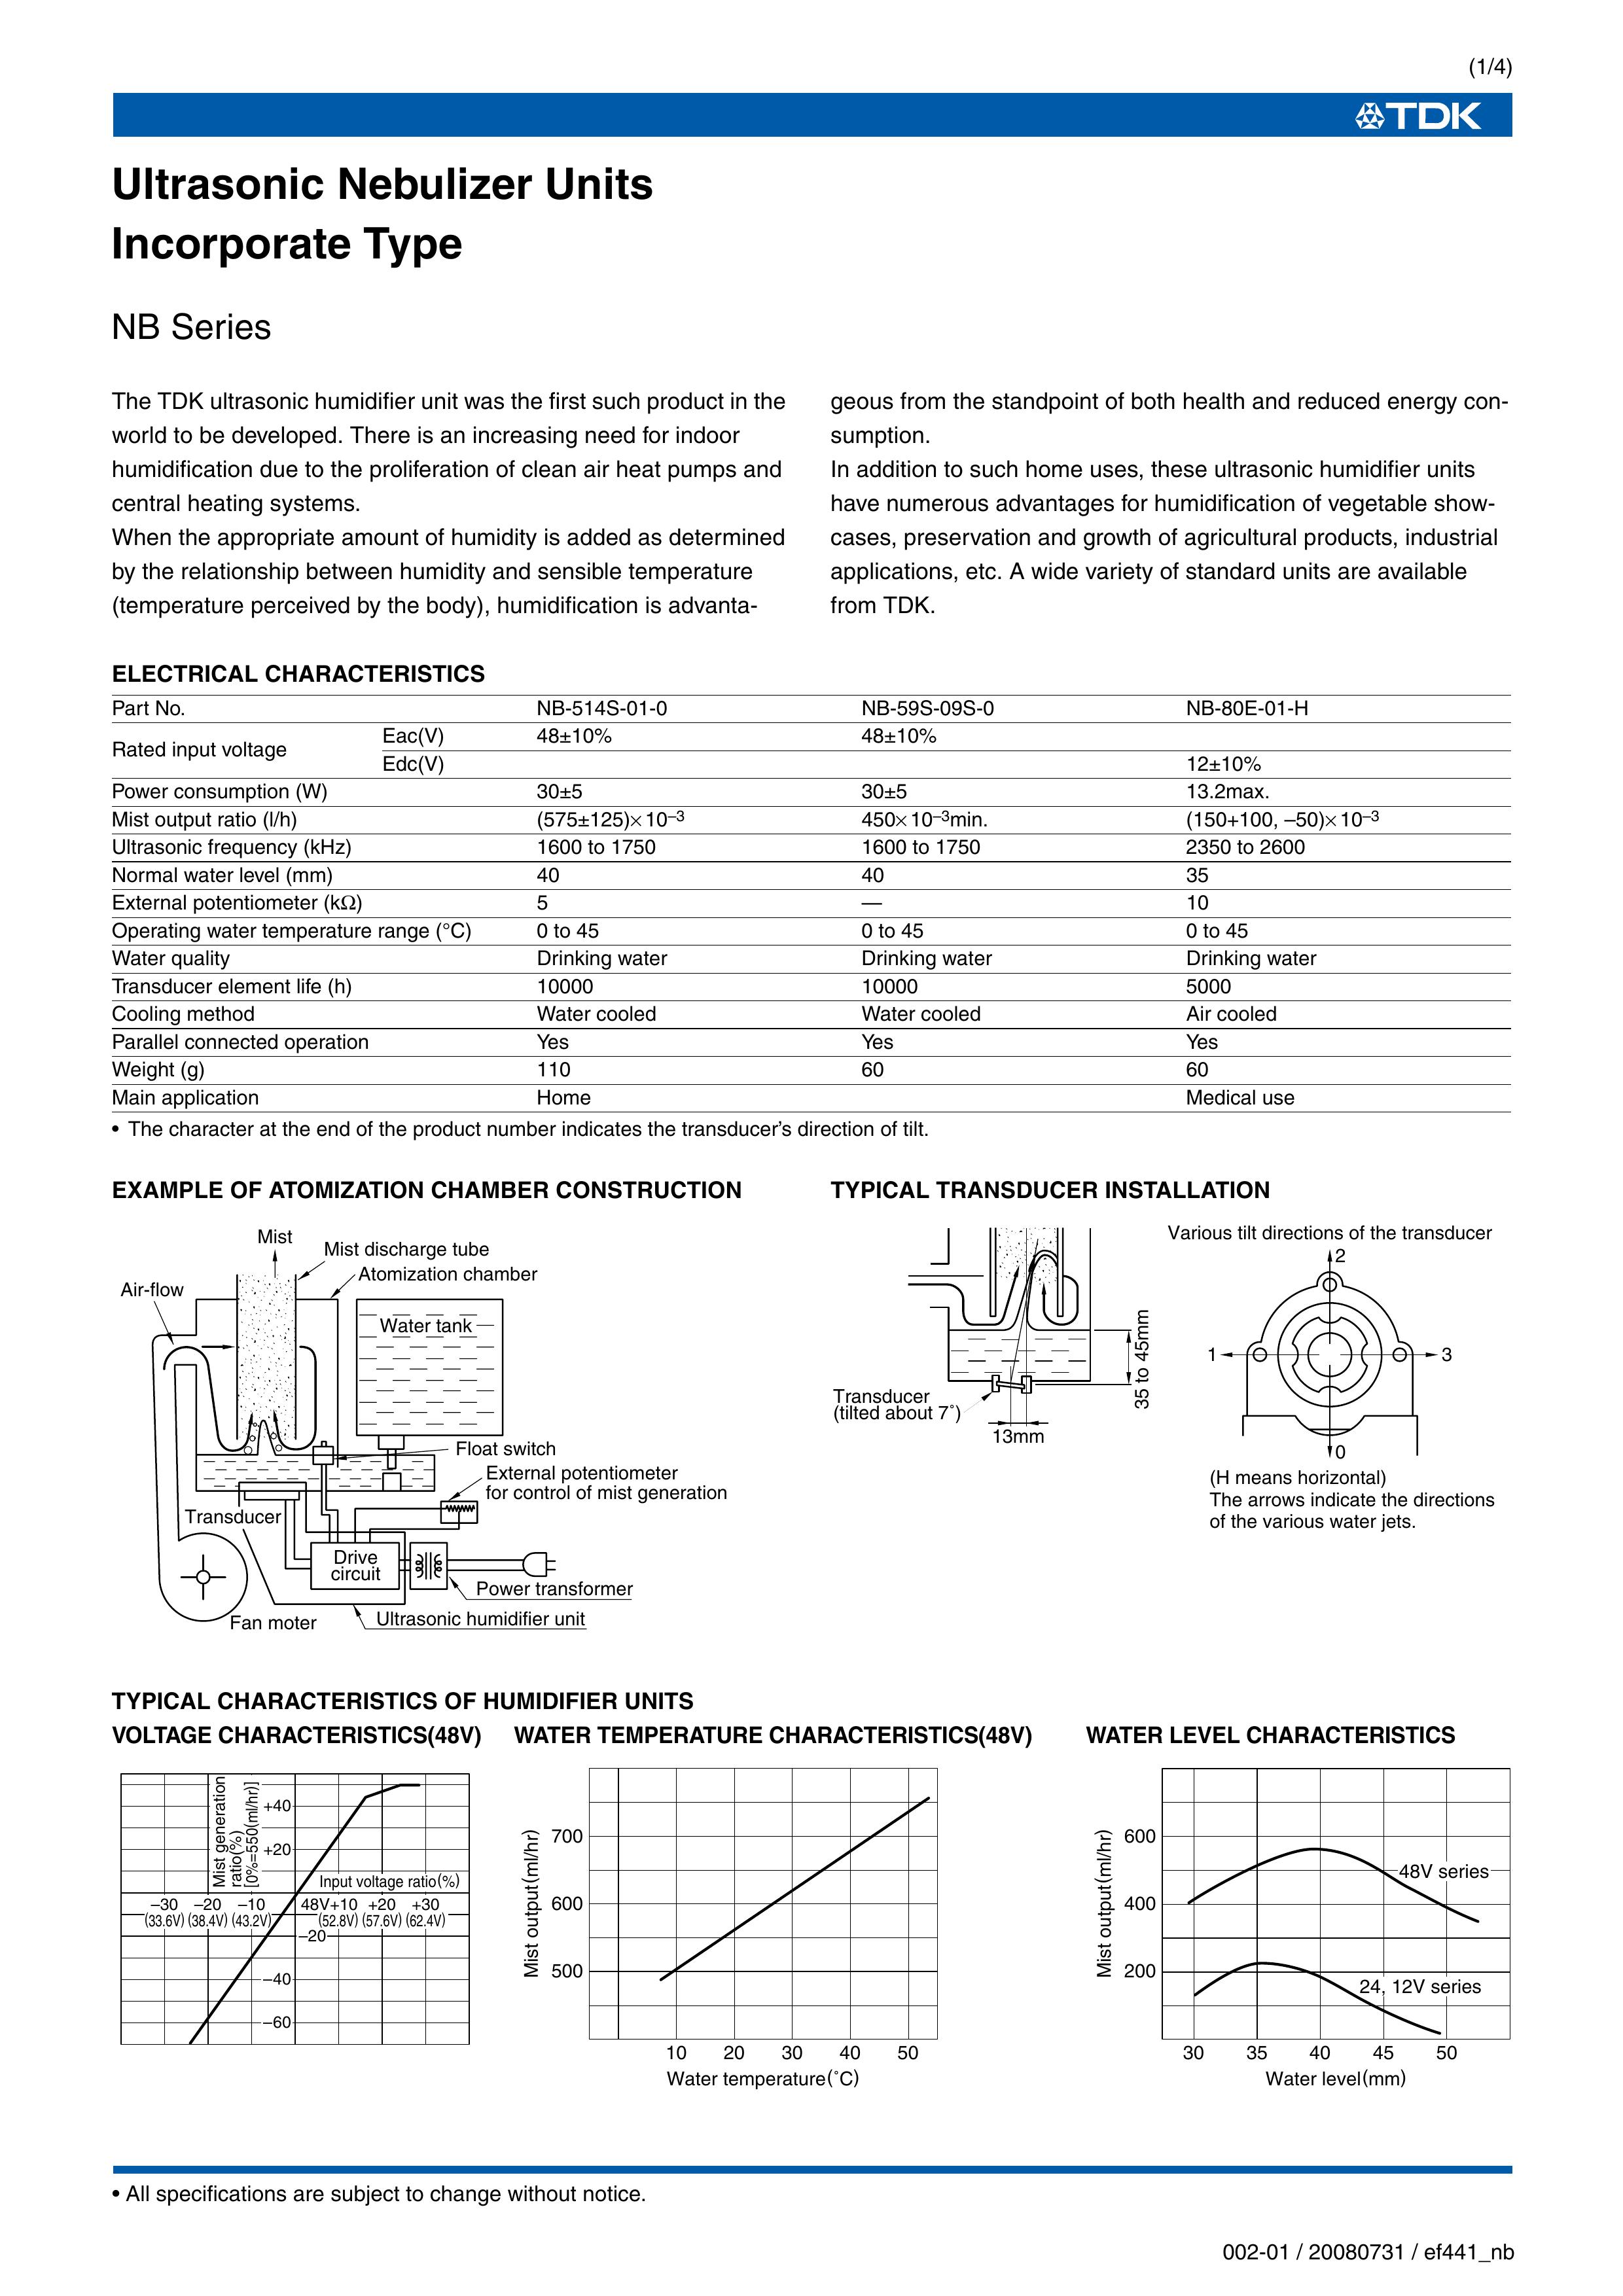 TDK NB-59S-09S-0 Nebulizer User Manual